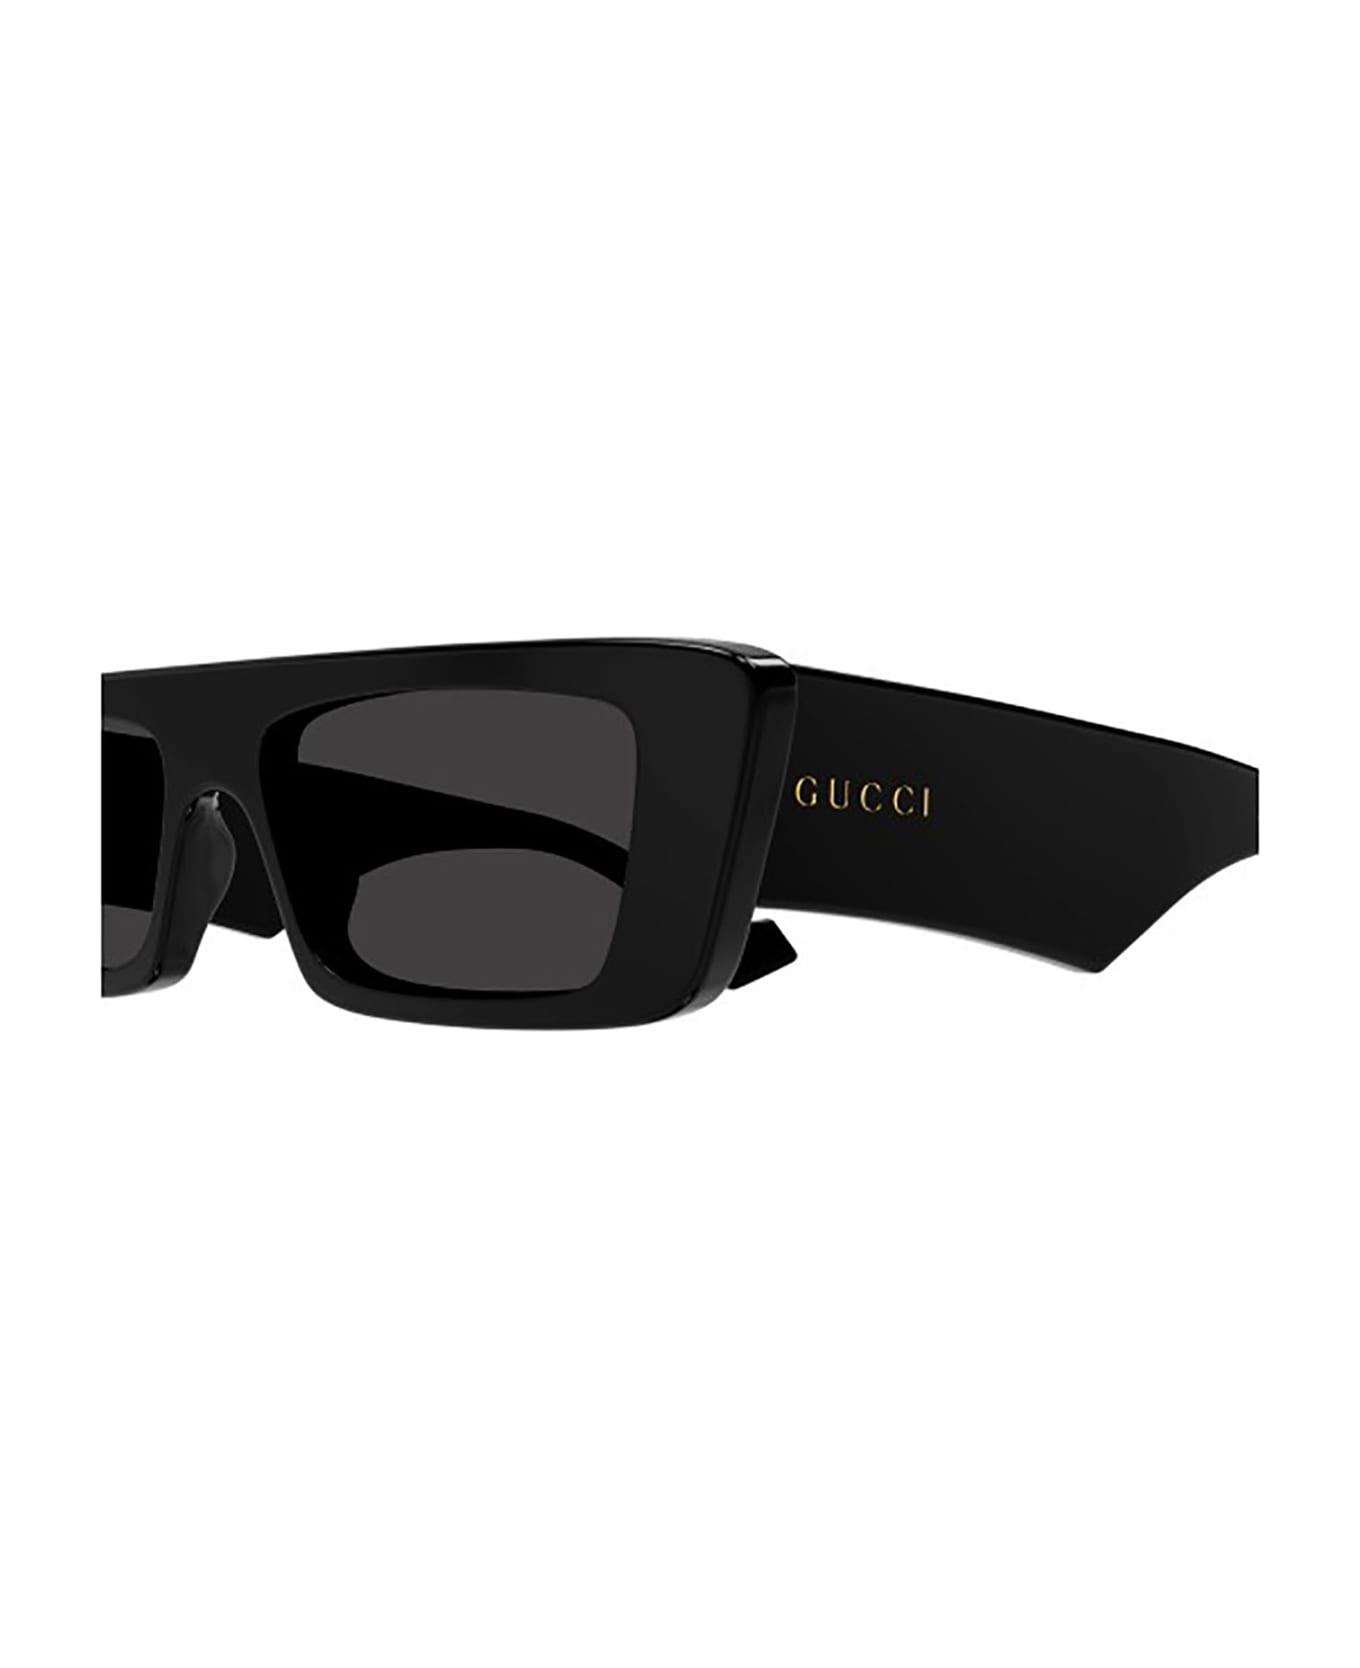 Gucci Eyewear Gg1331s Sunglasses - 002 black black brown サングラス